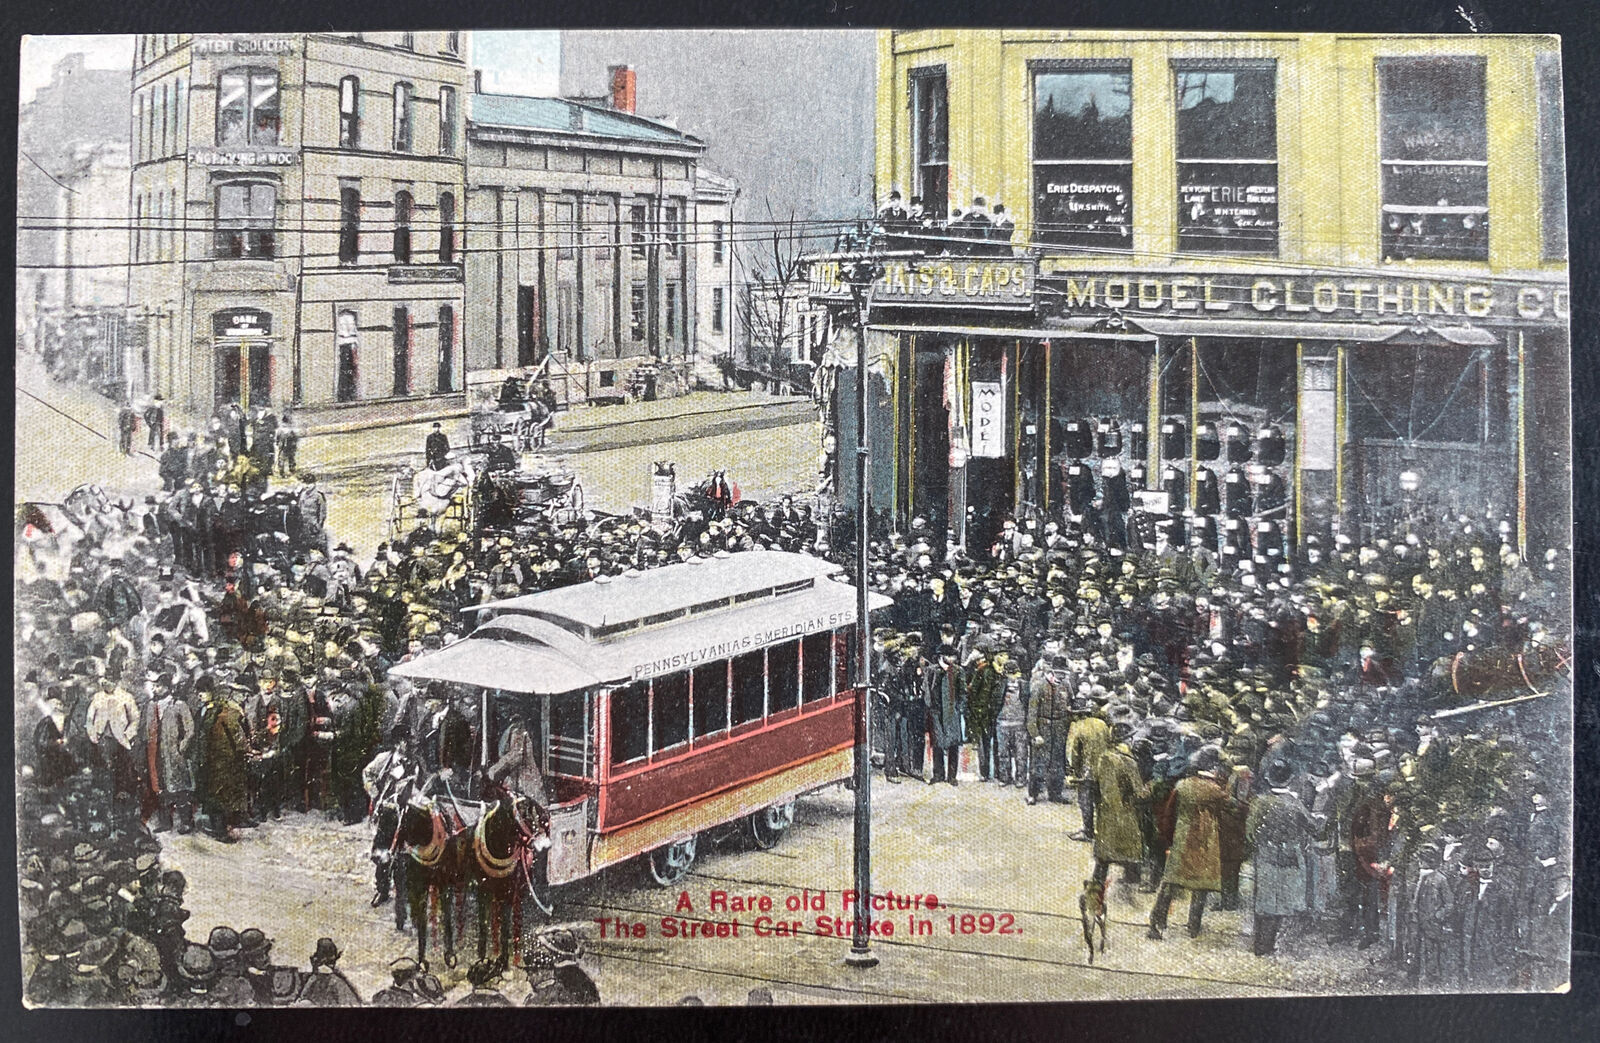 Mint USA Color Picture Postcard The Street Car Strike Feb 27 1892